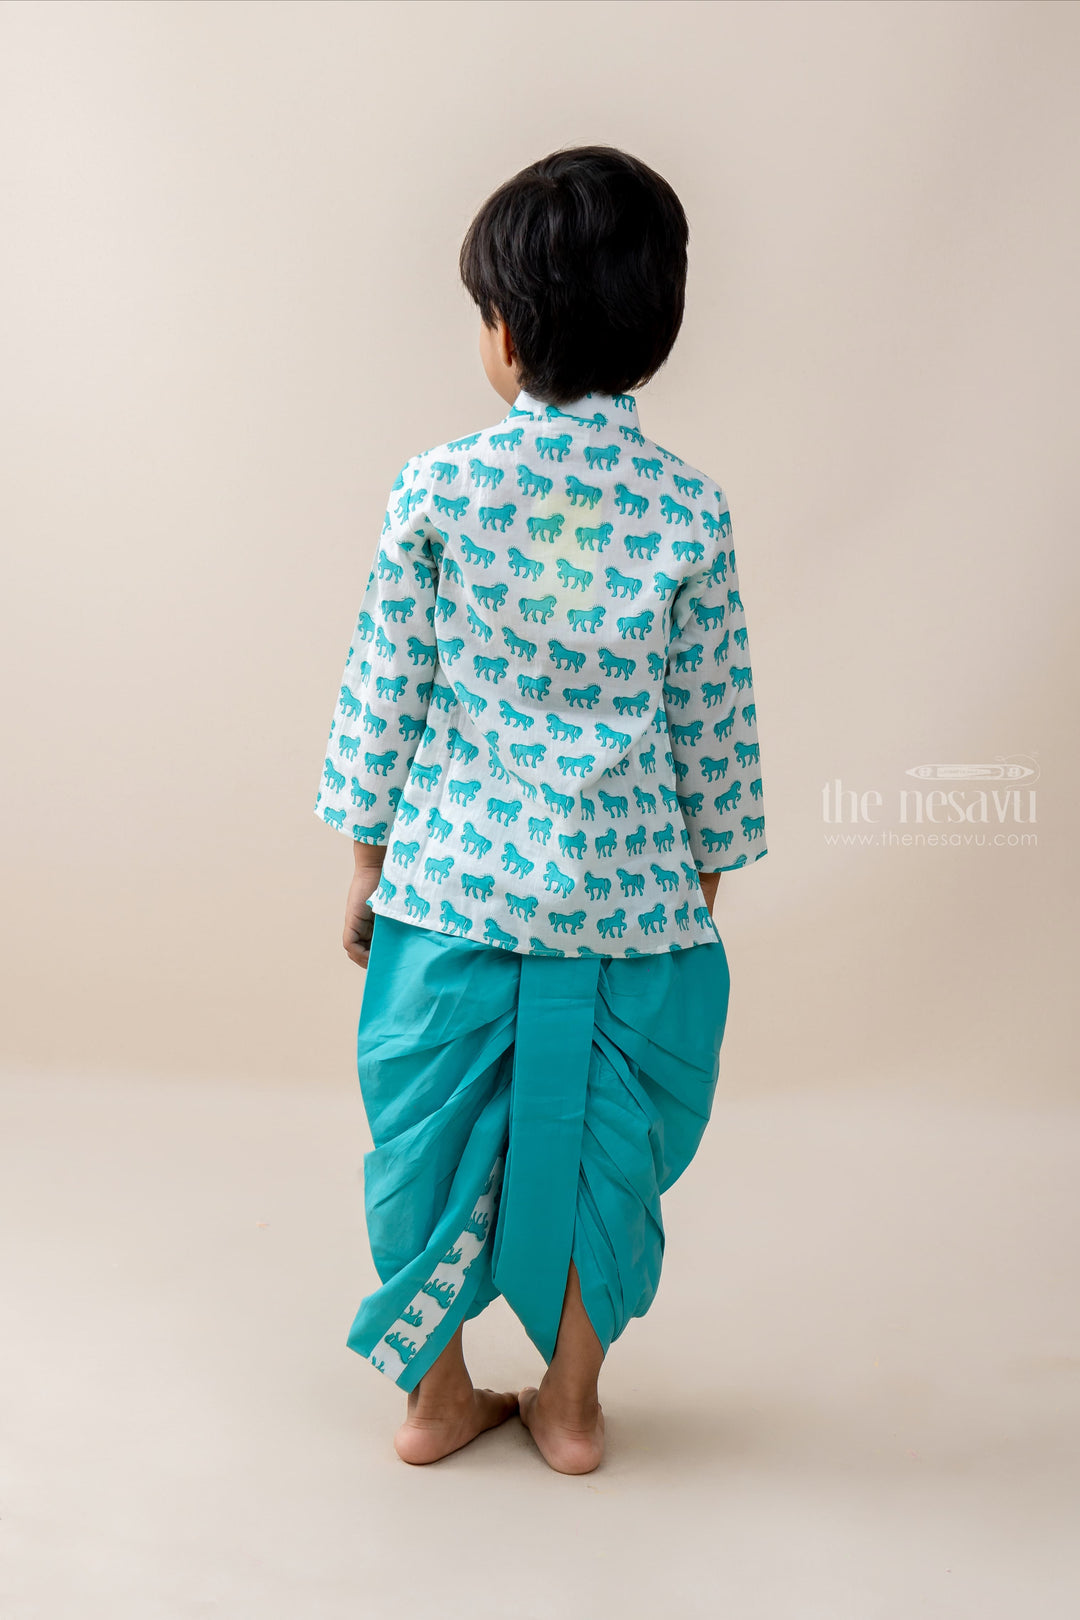 The Nesavu Ethnic Sets Horse Printed Sky Blue Cotton Kurta Suit For Baby Boys psr silks Nesavu